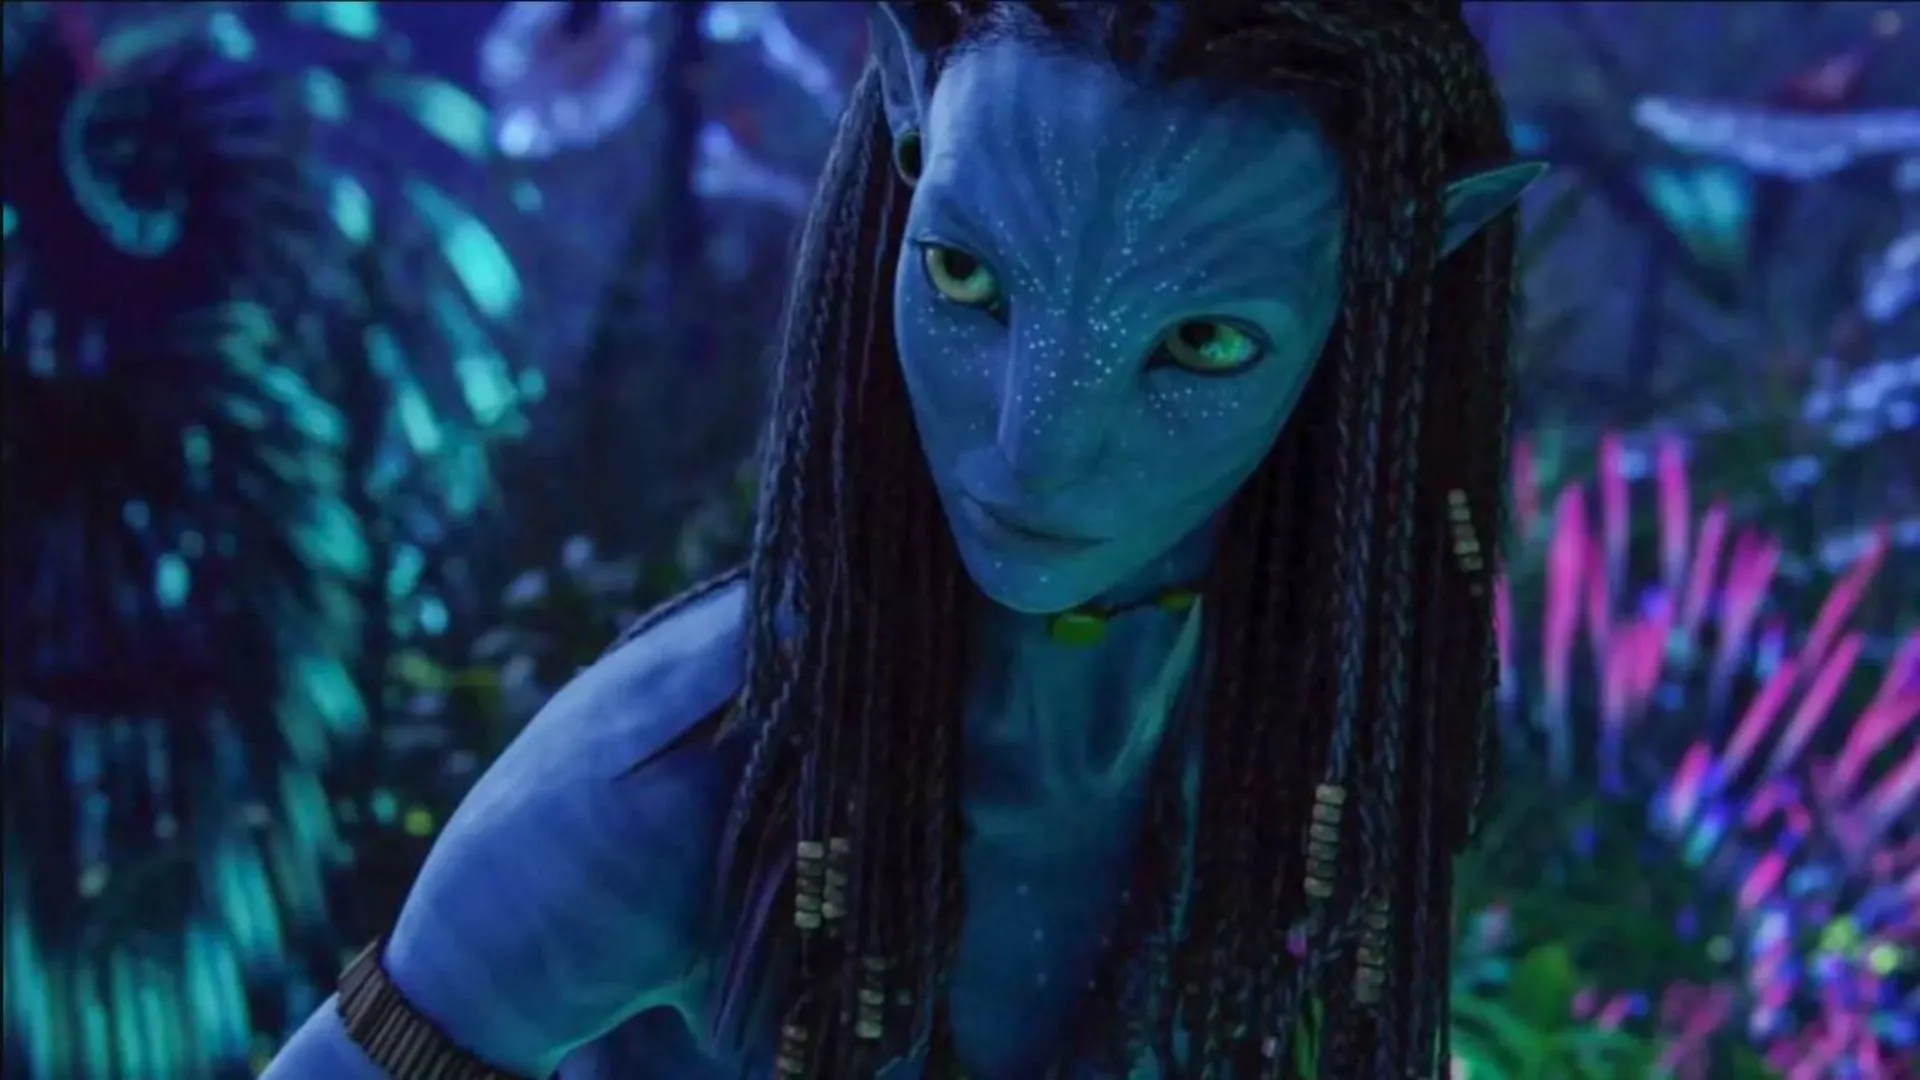 Avatar 4 Has Begun Filming Confirms James Cameron